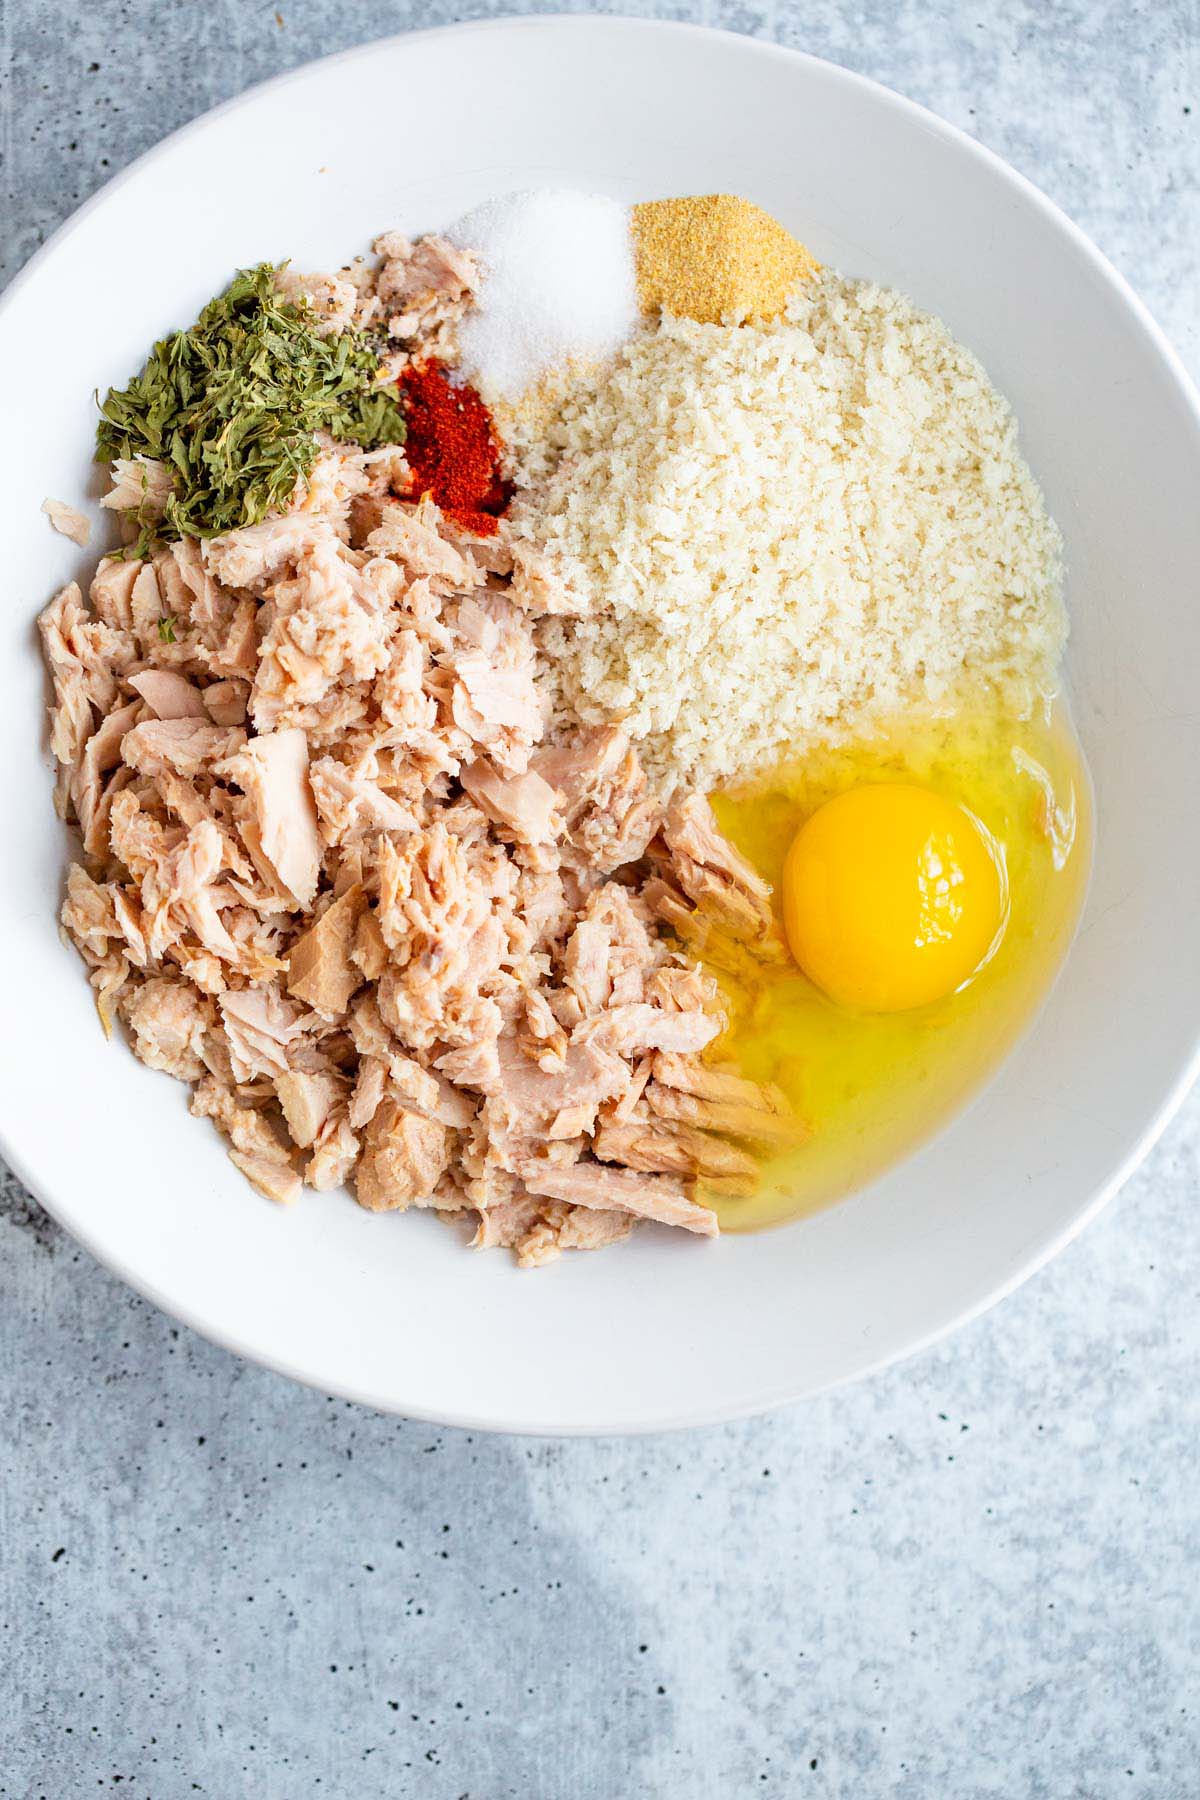 Tuna, egg, panko, and seasonings in a bowl.